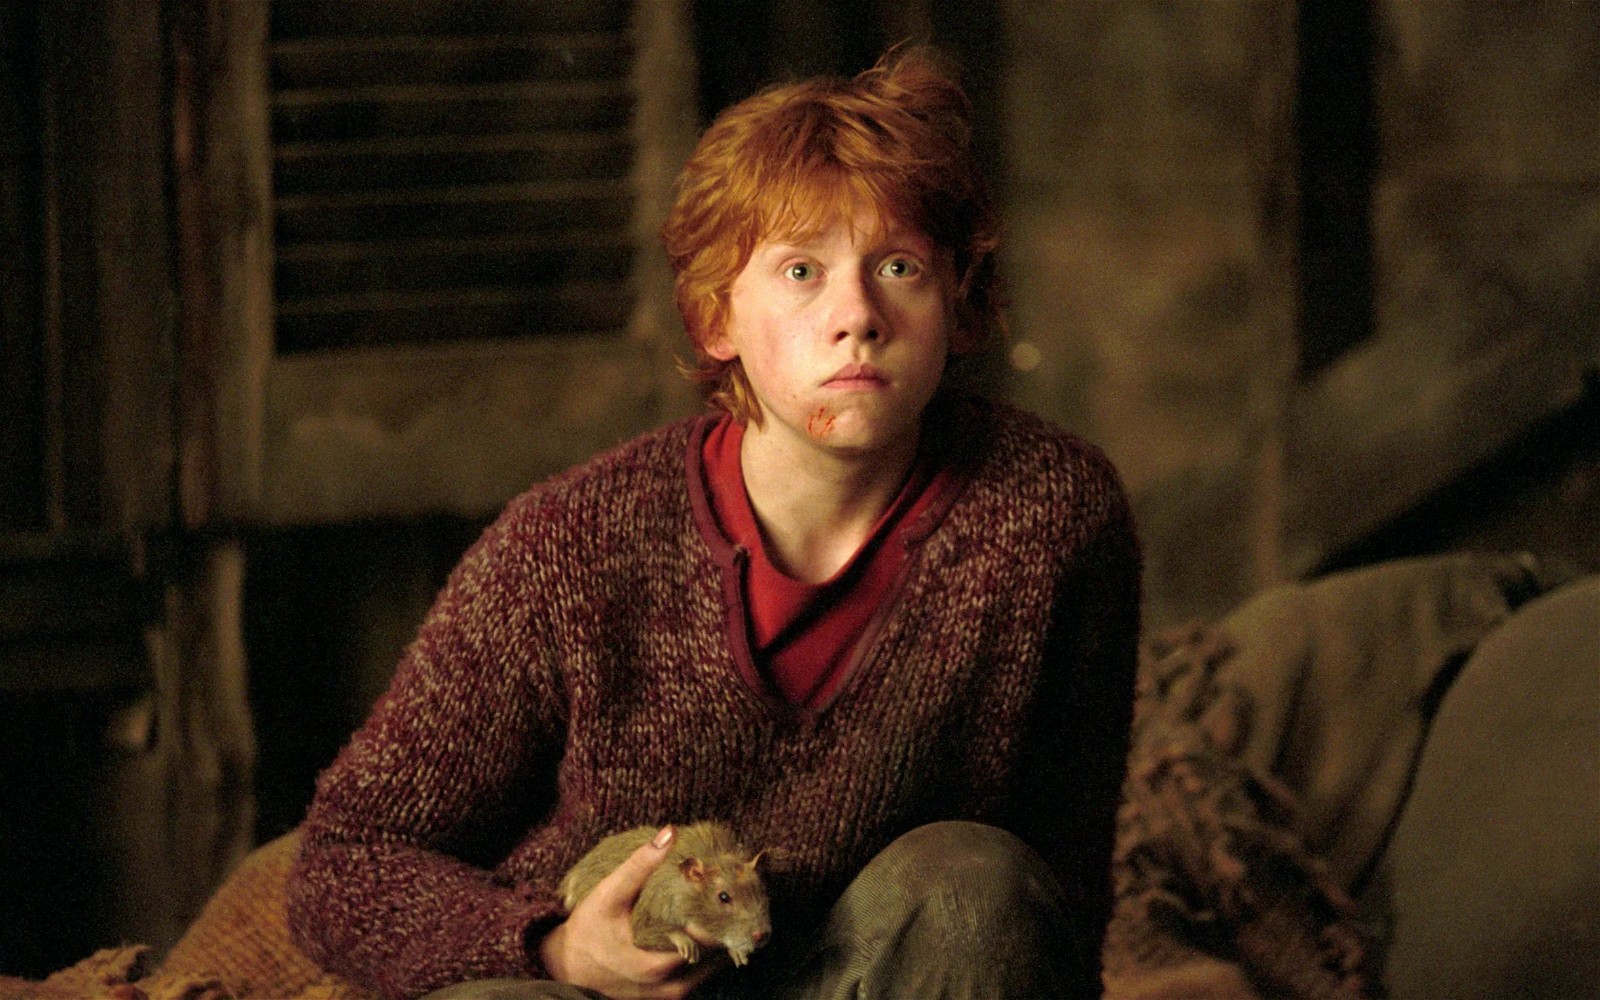 Rupert Grint in Harry Potter